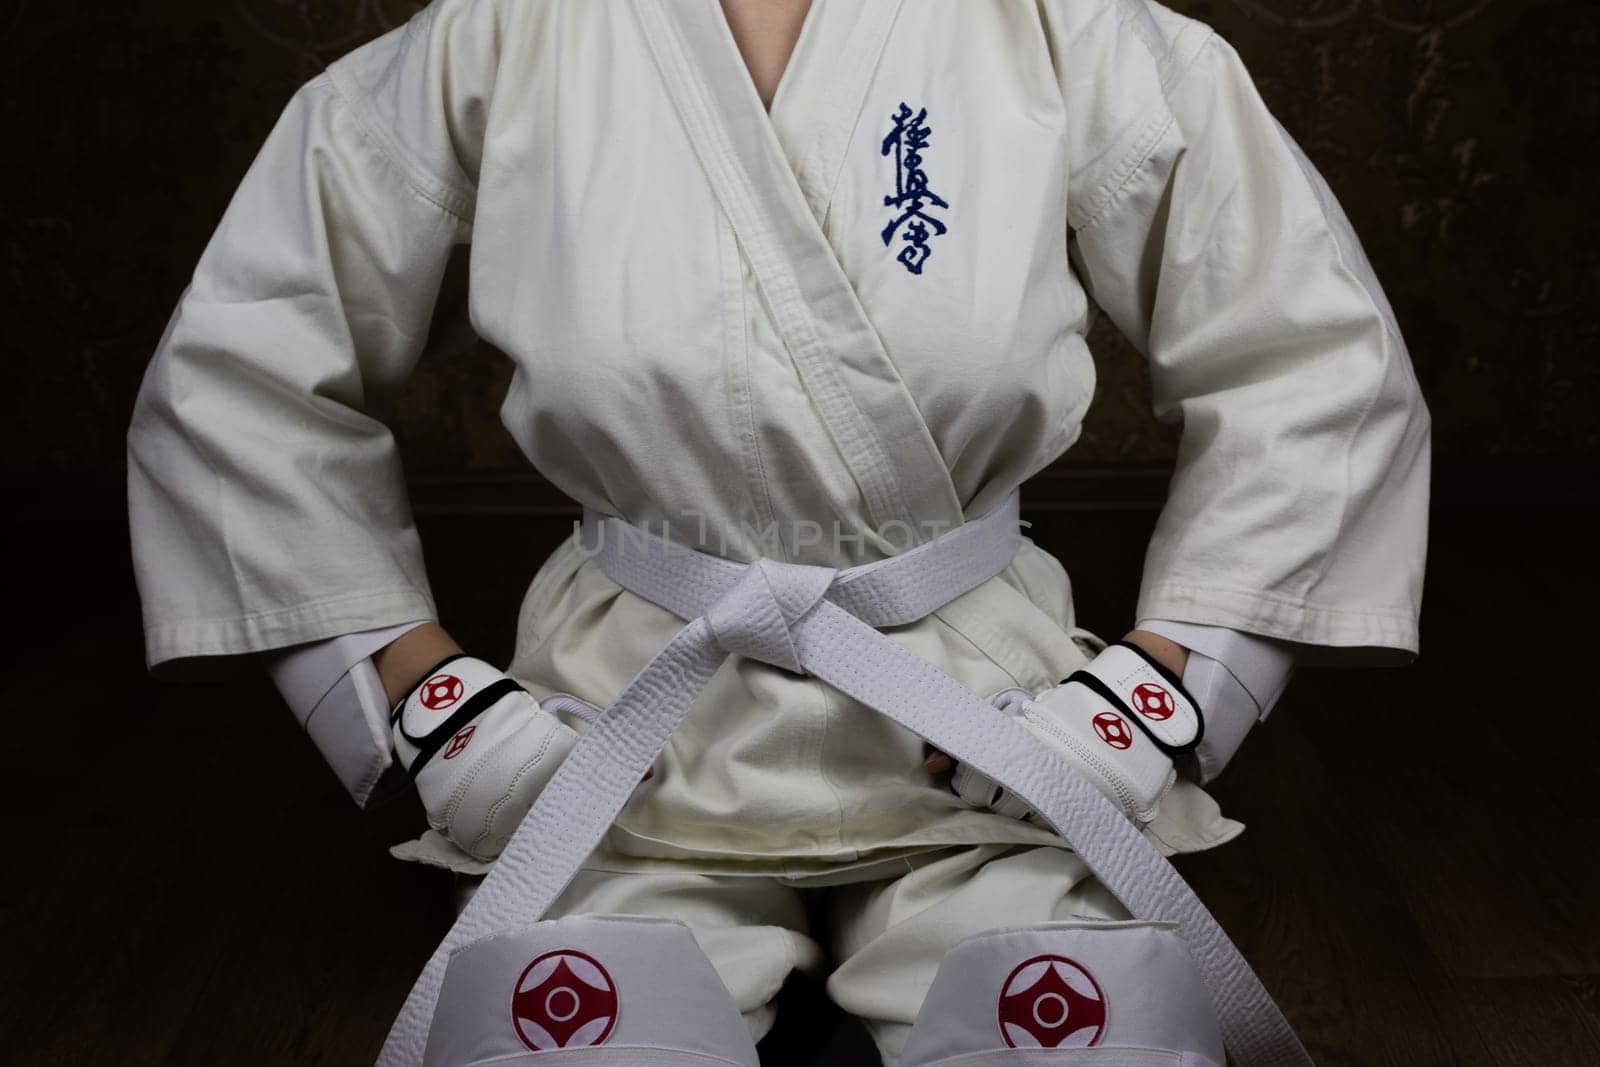 Girl athlete in kimono and white Kyokushinkai karate belt sits in a traditional seiza pose. Martial arts athlete in protective equipment. Inscription in Japanese: Kyokushinkai